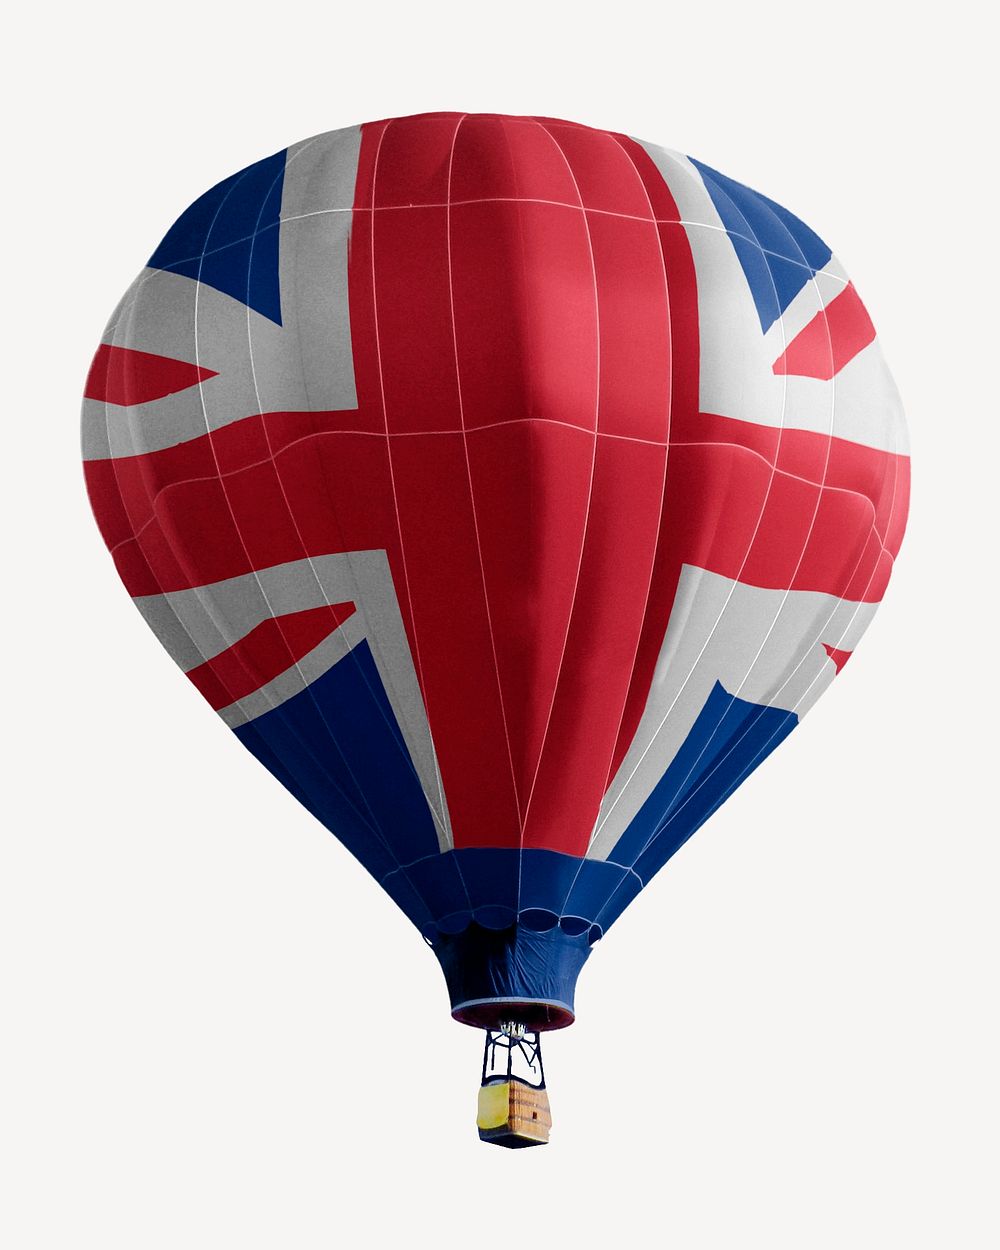 United Kingdom flag on hot air balloon